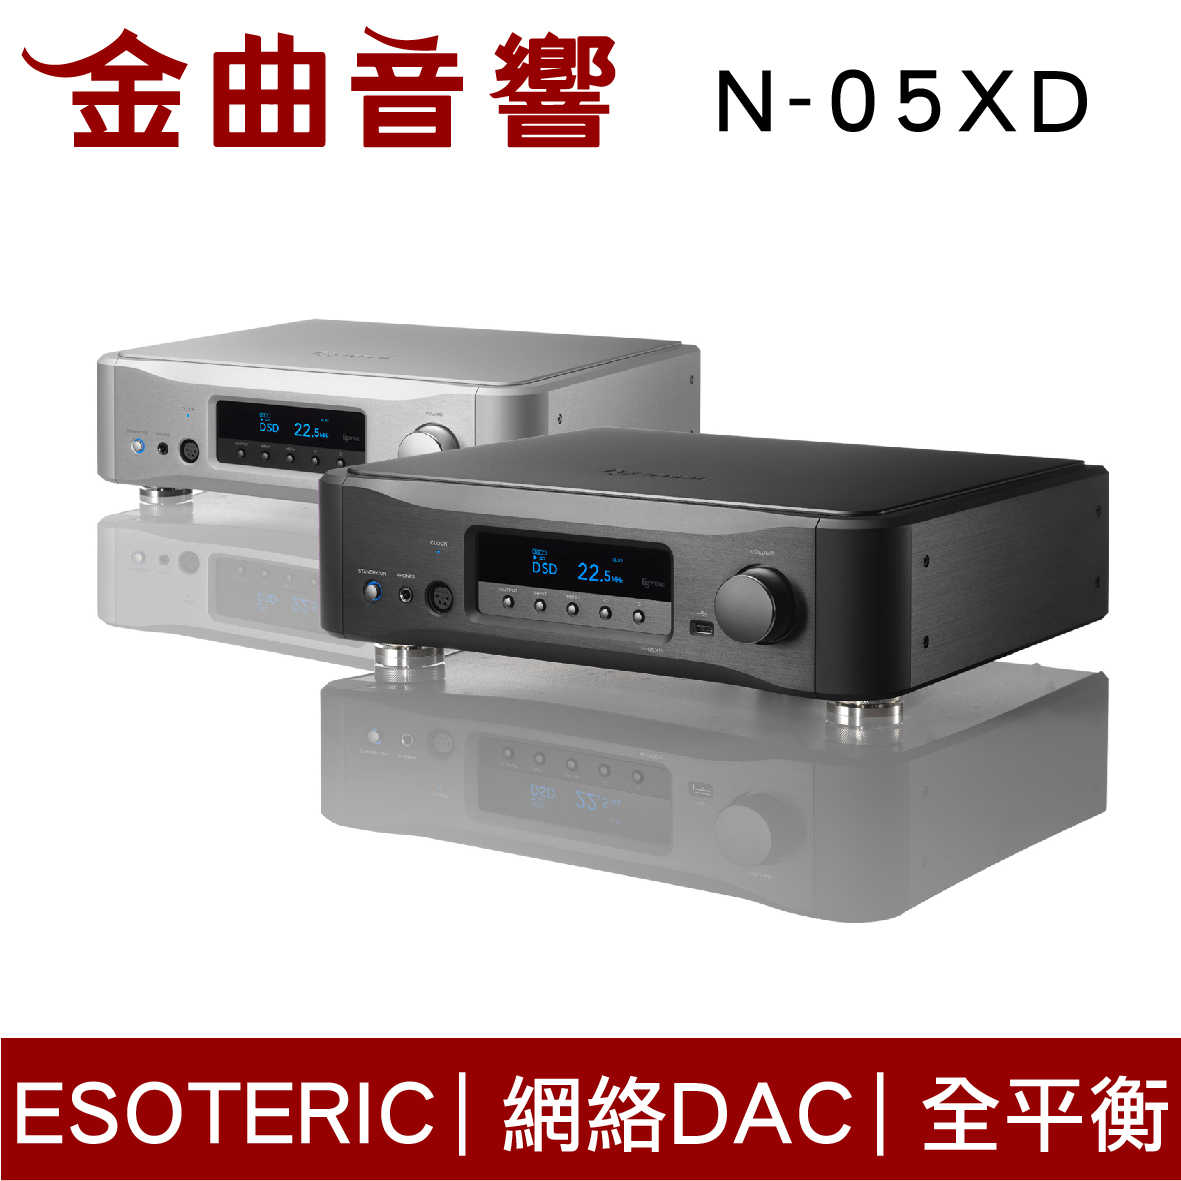 ESOTERIC N-05XD DAC 黑色 網路串流 聲道獨立 耳擴 | 金曲音響